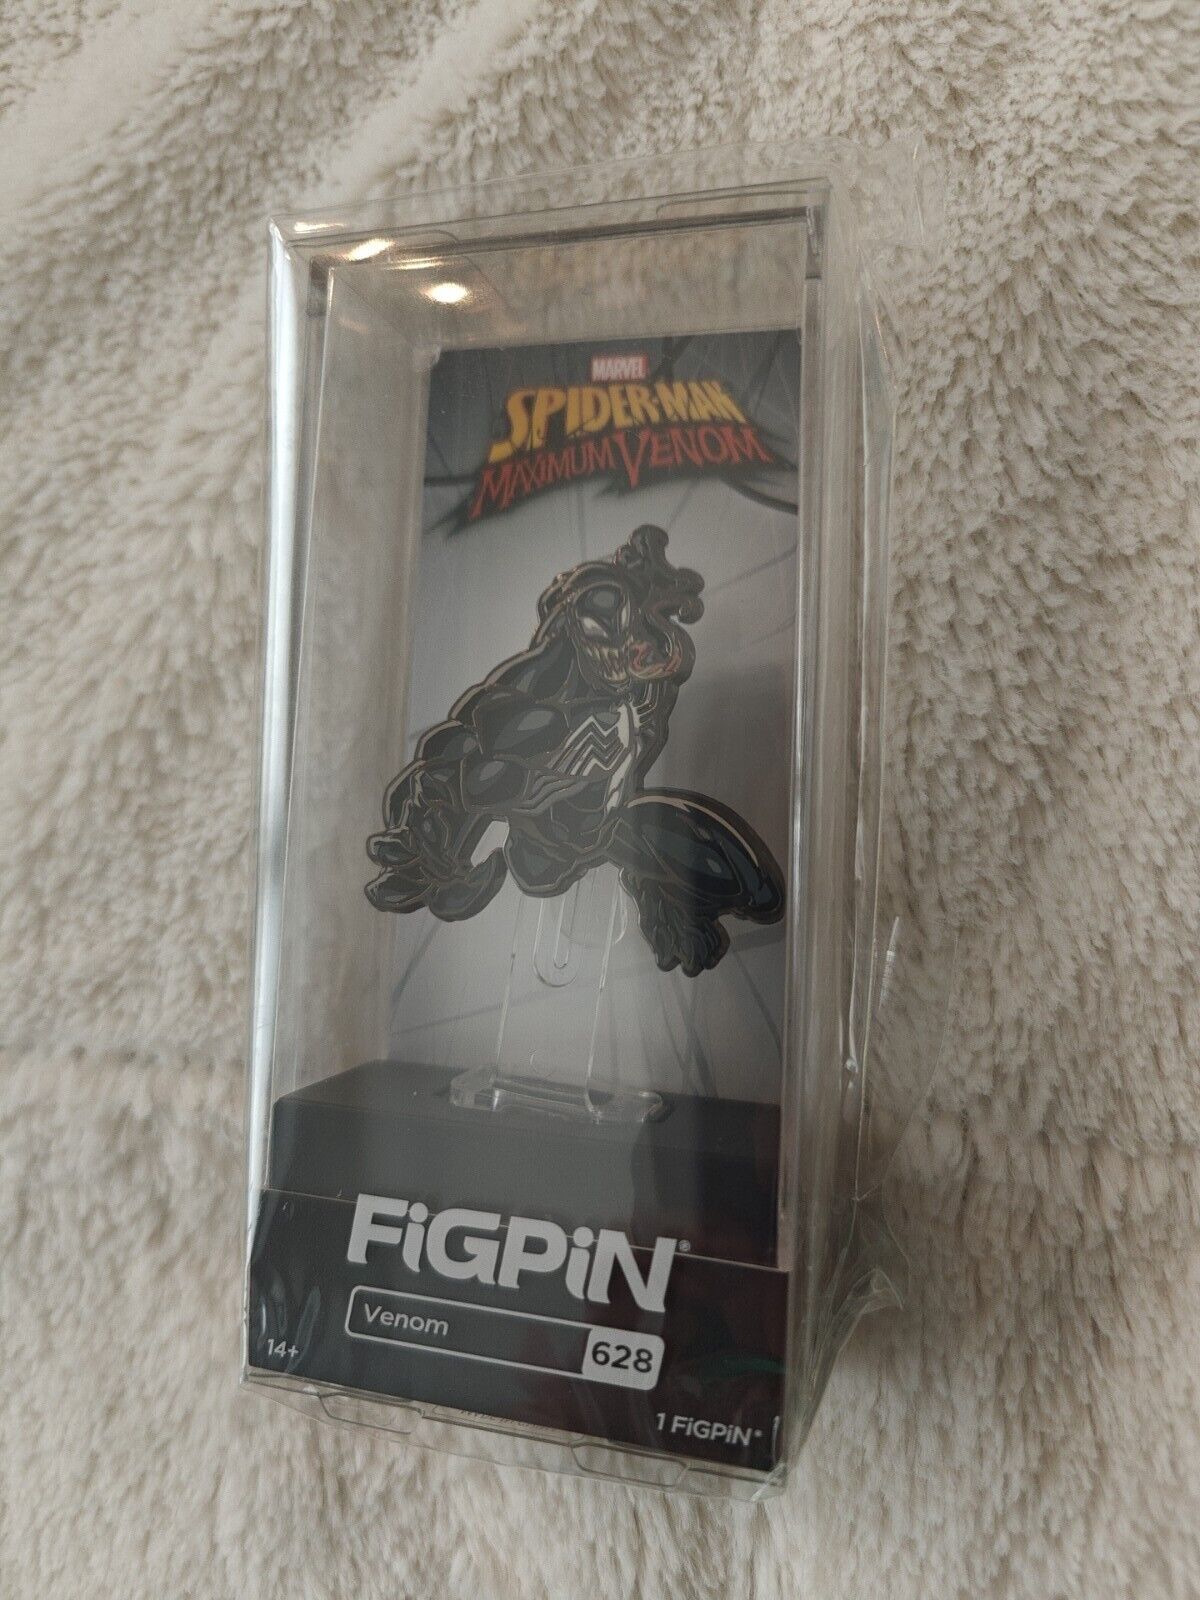 FigPin Marvel Spider-Man Maximum Venom 628 New Sealed Fig Pin